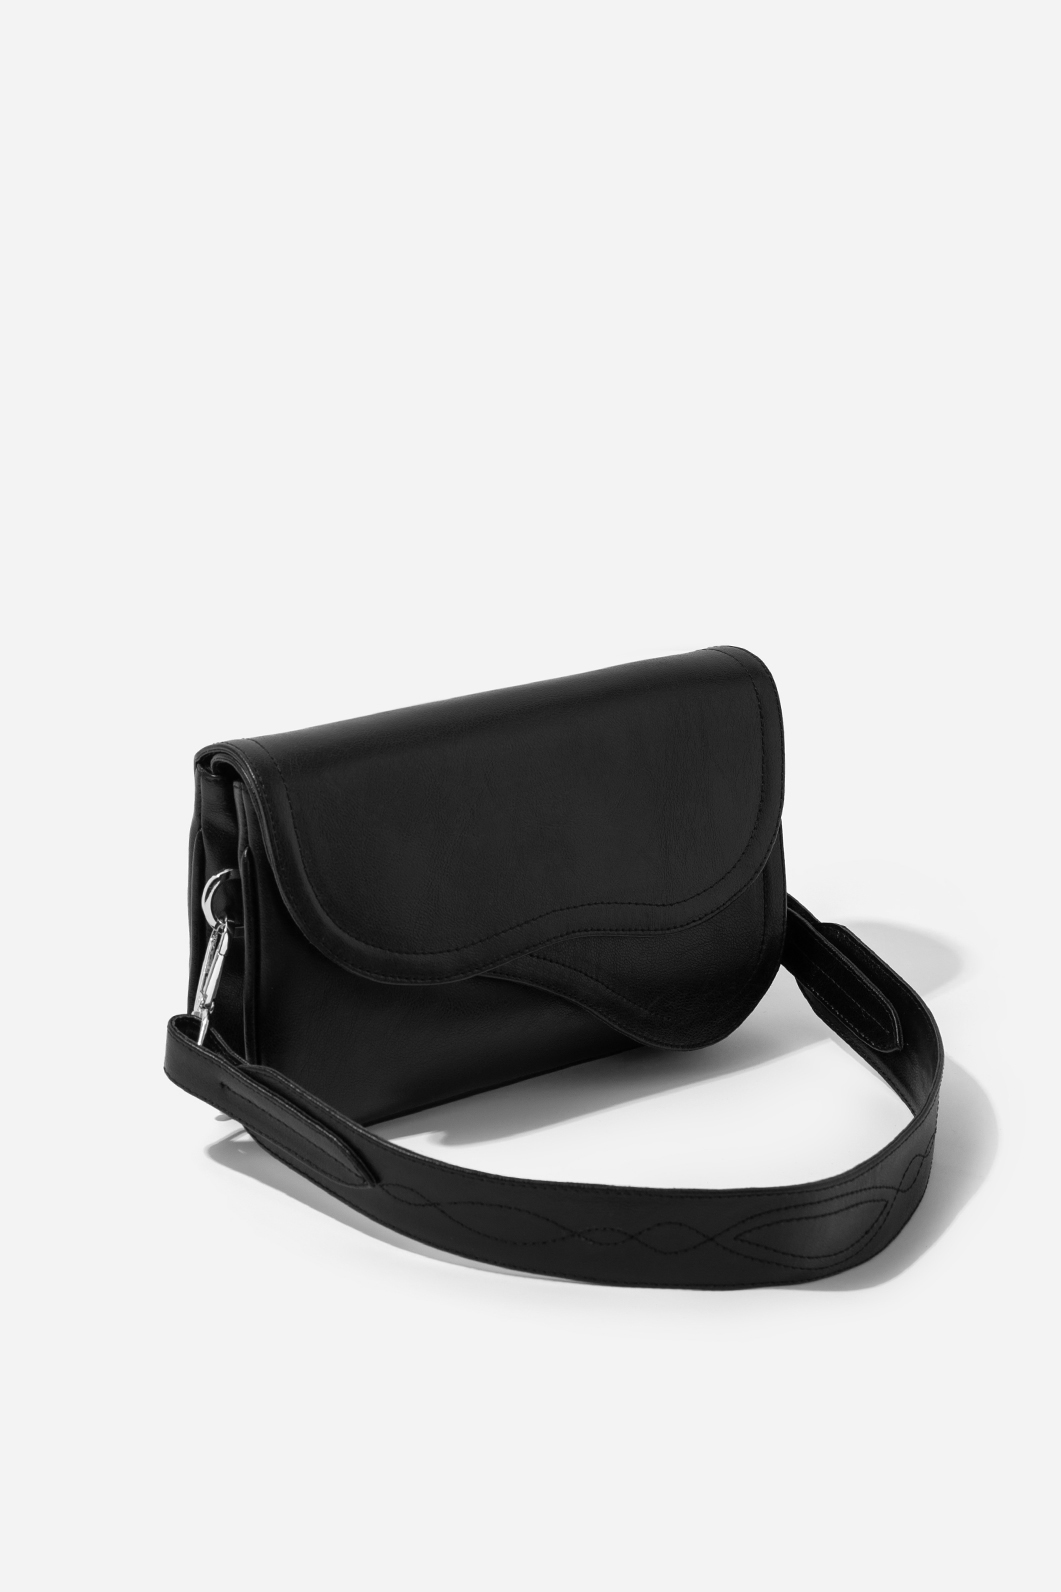 Saddle bag 2
black leather crossbody /silver/